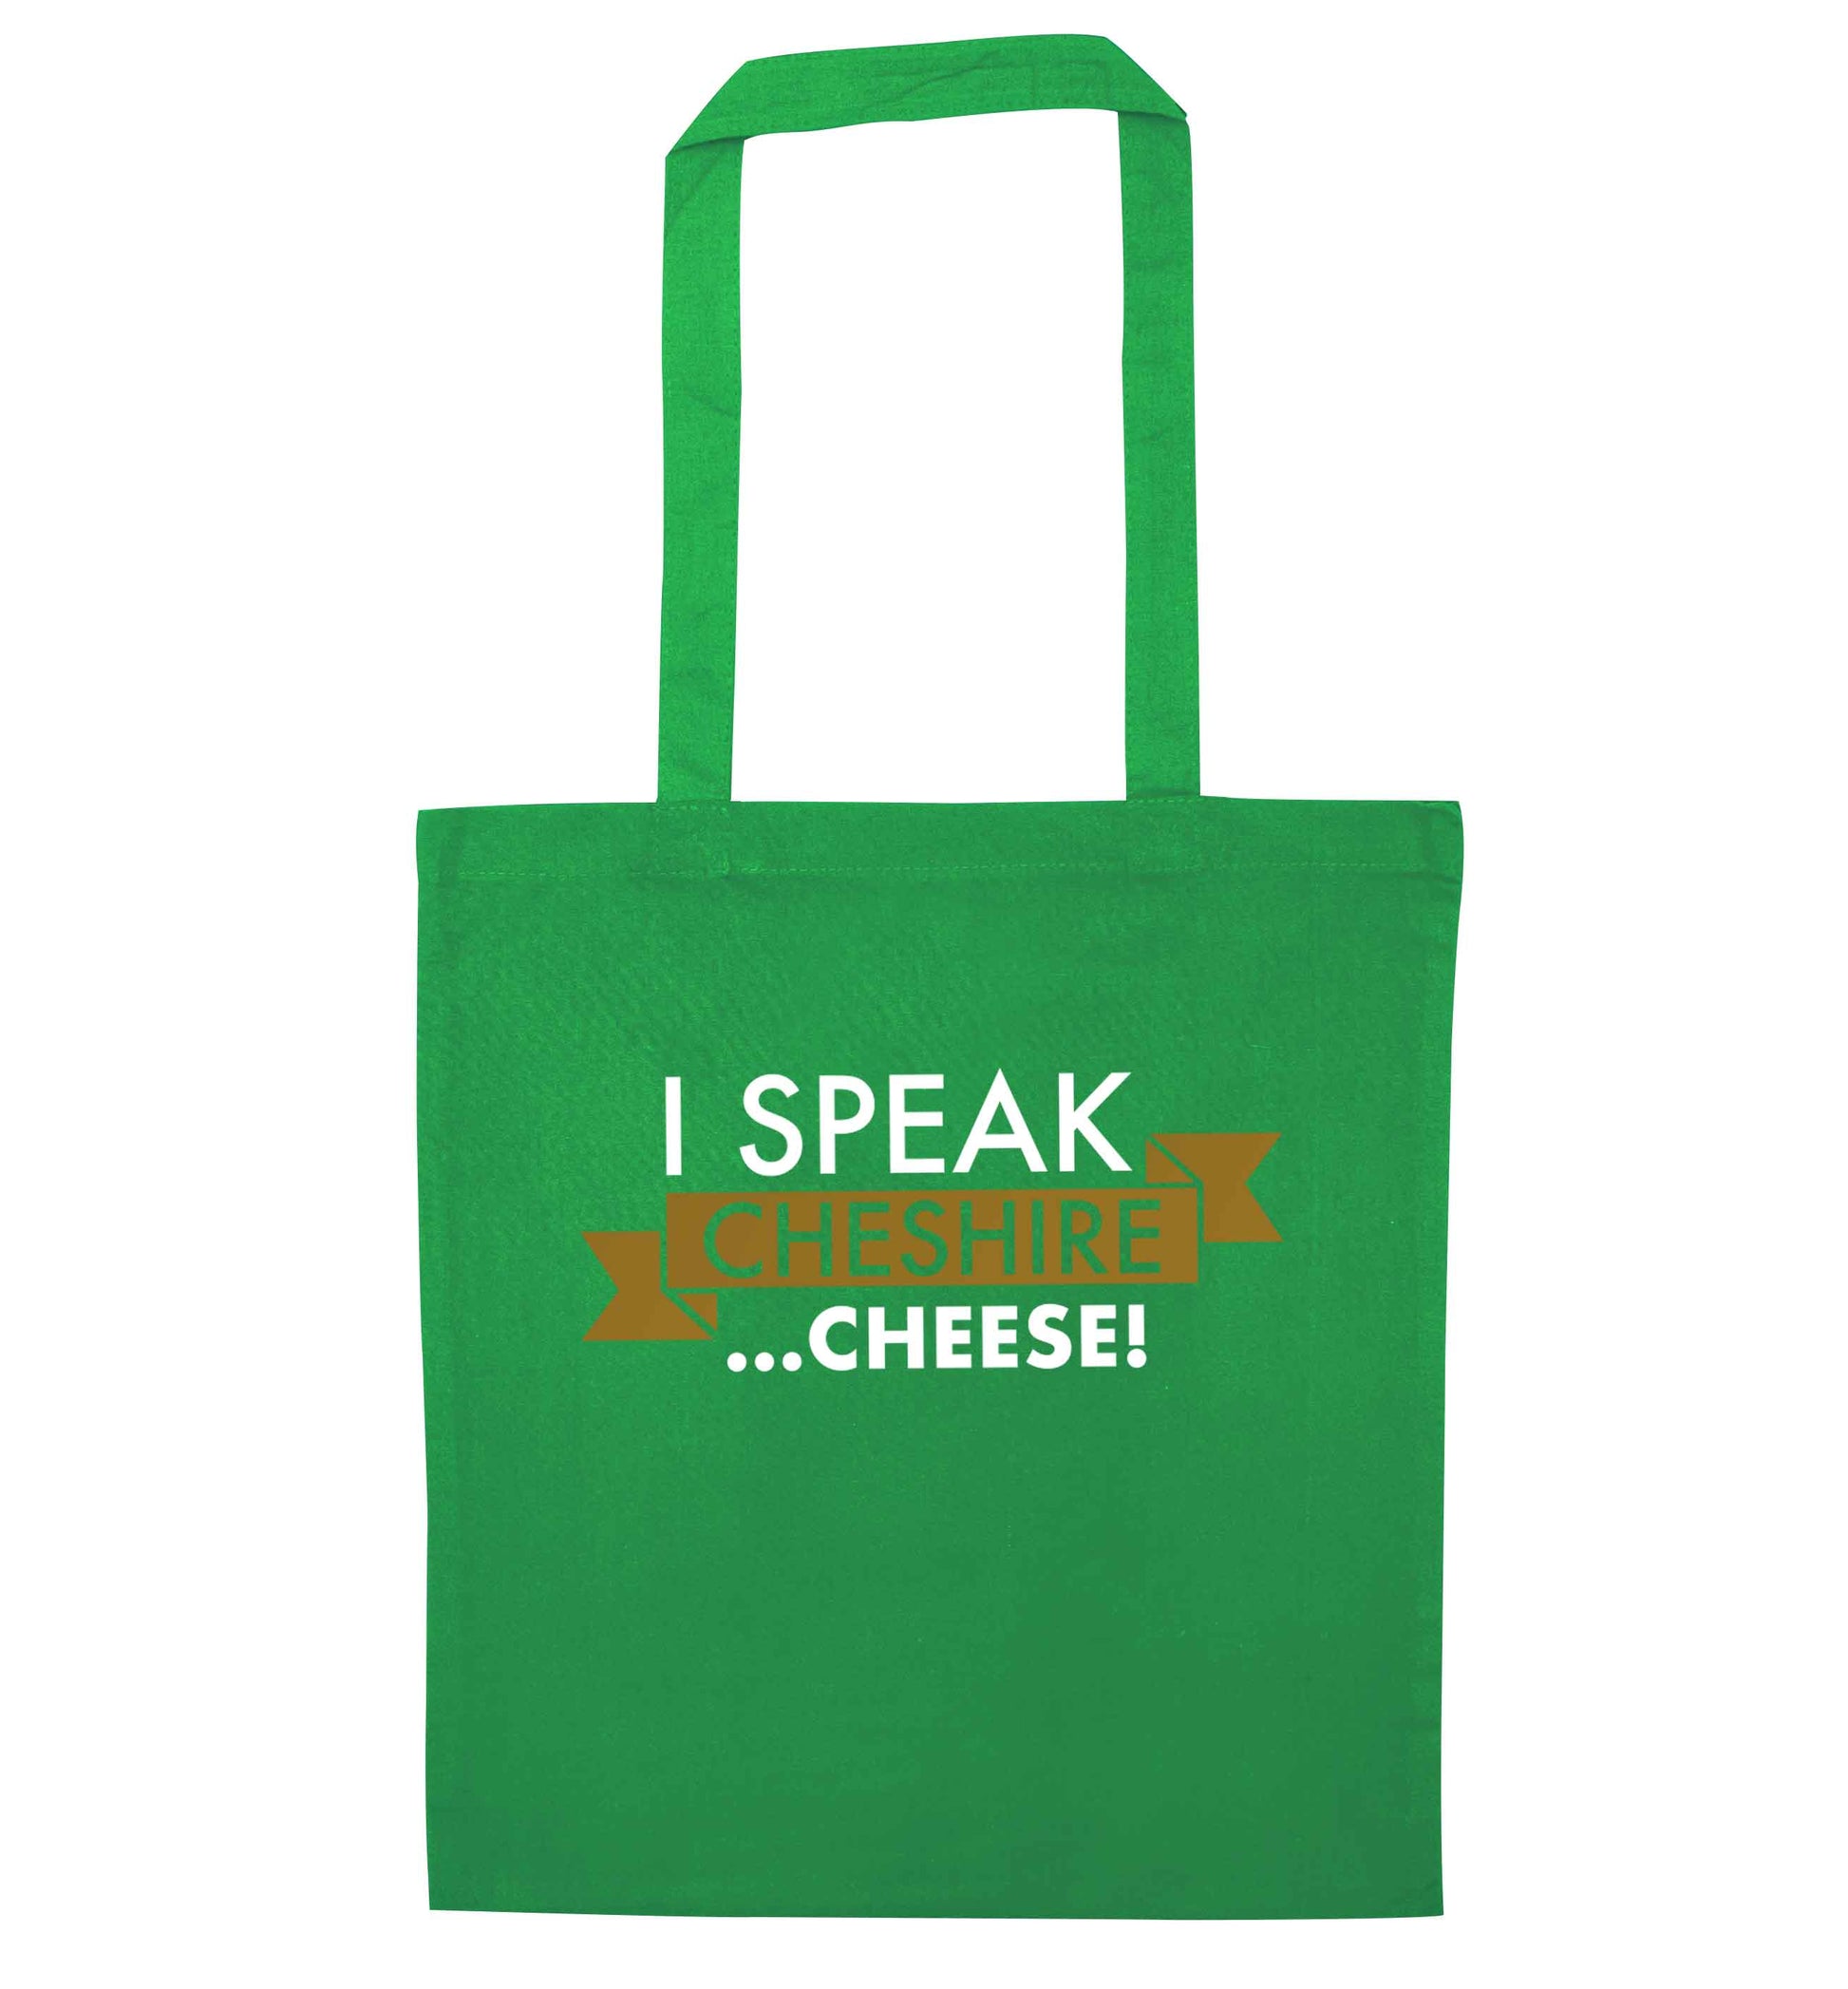 I speak Cheshire cheese green tote bag